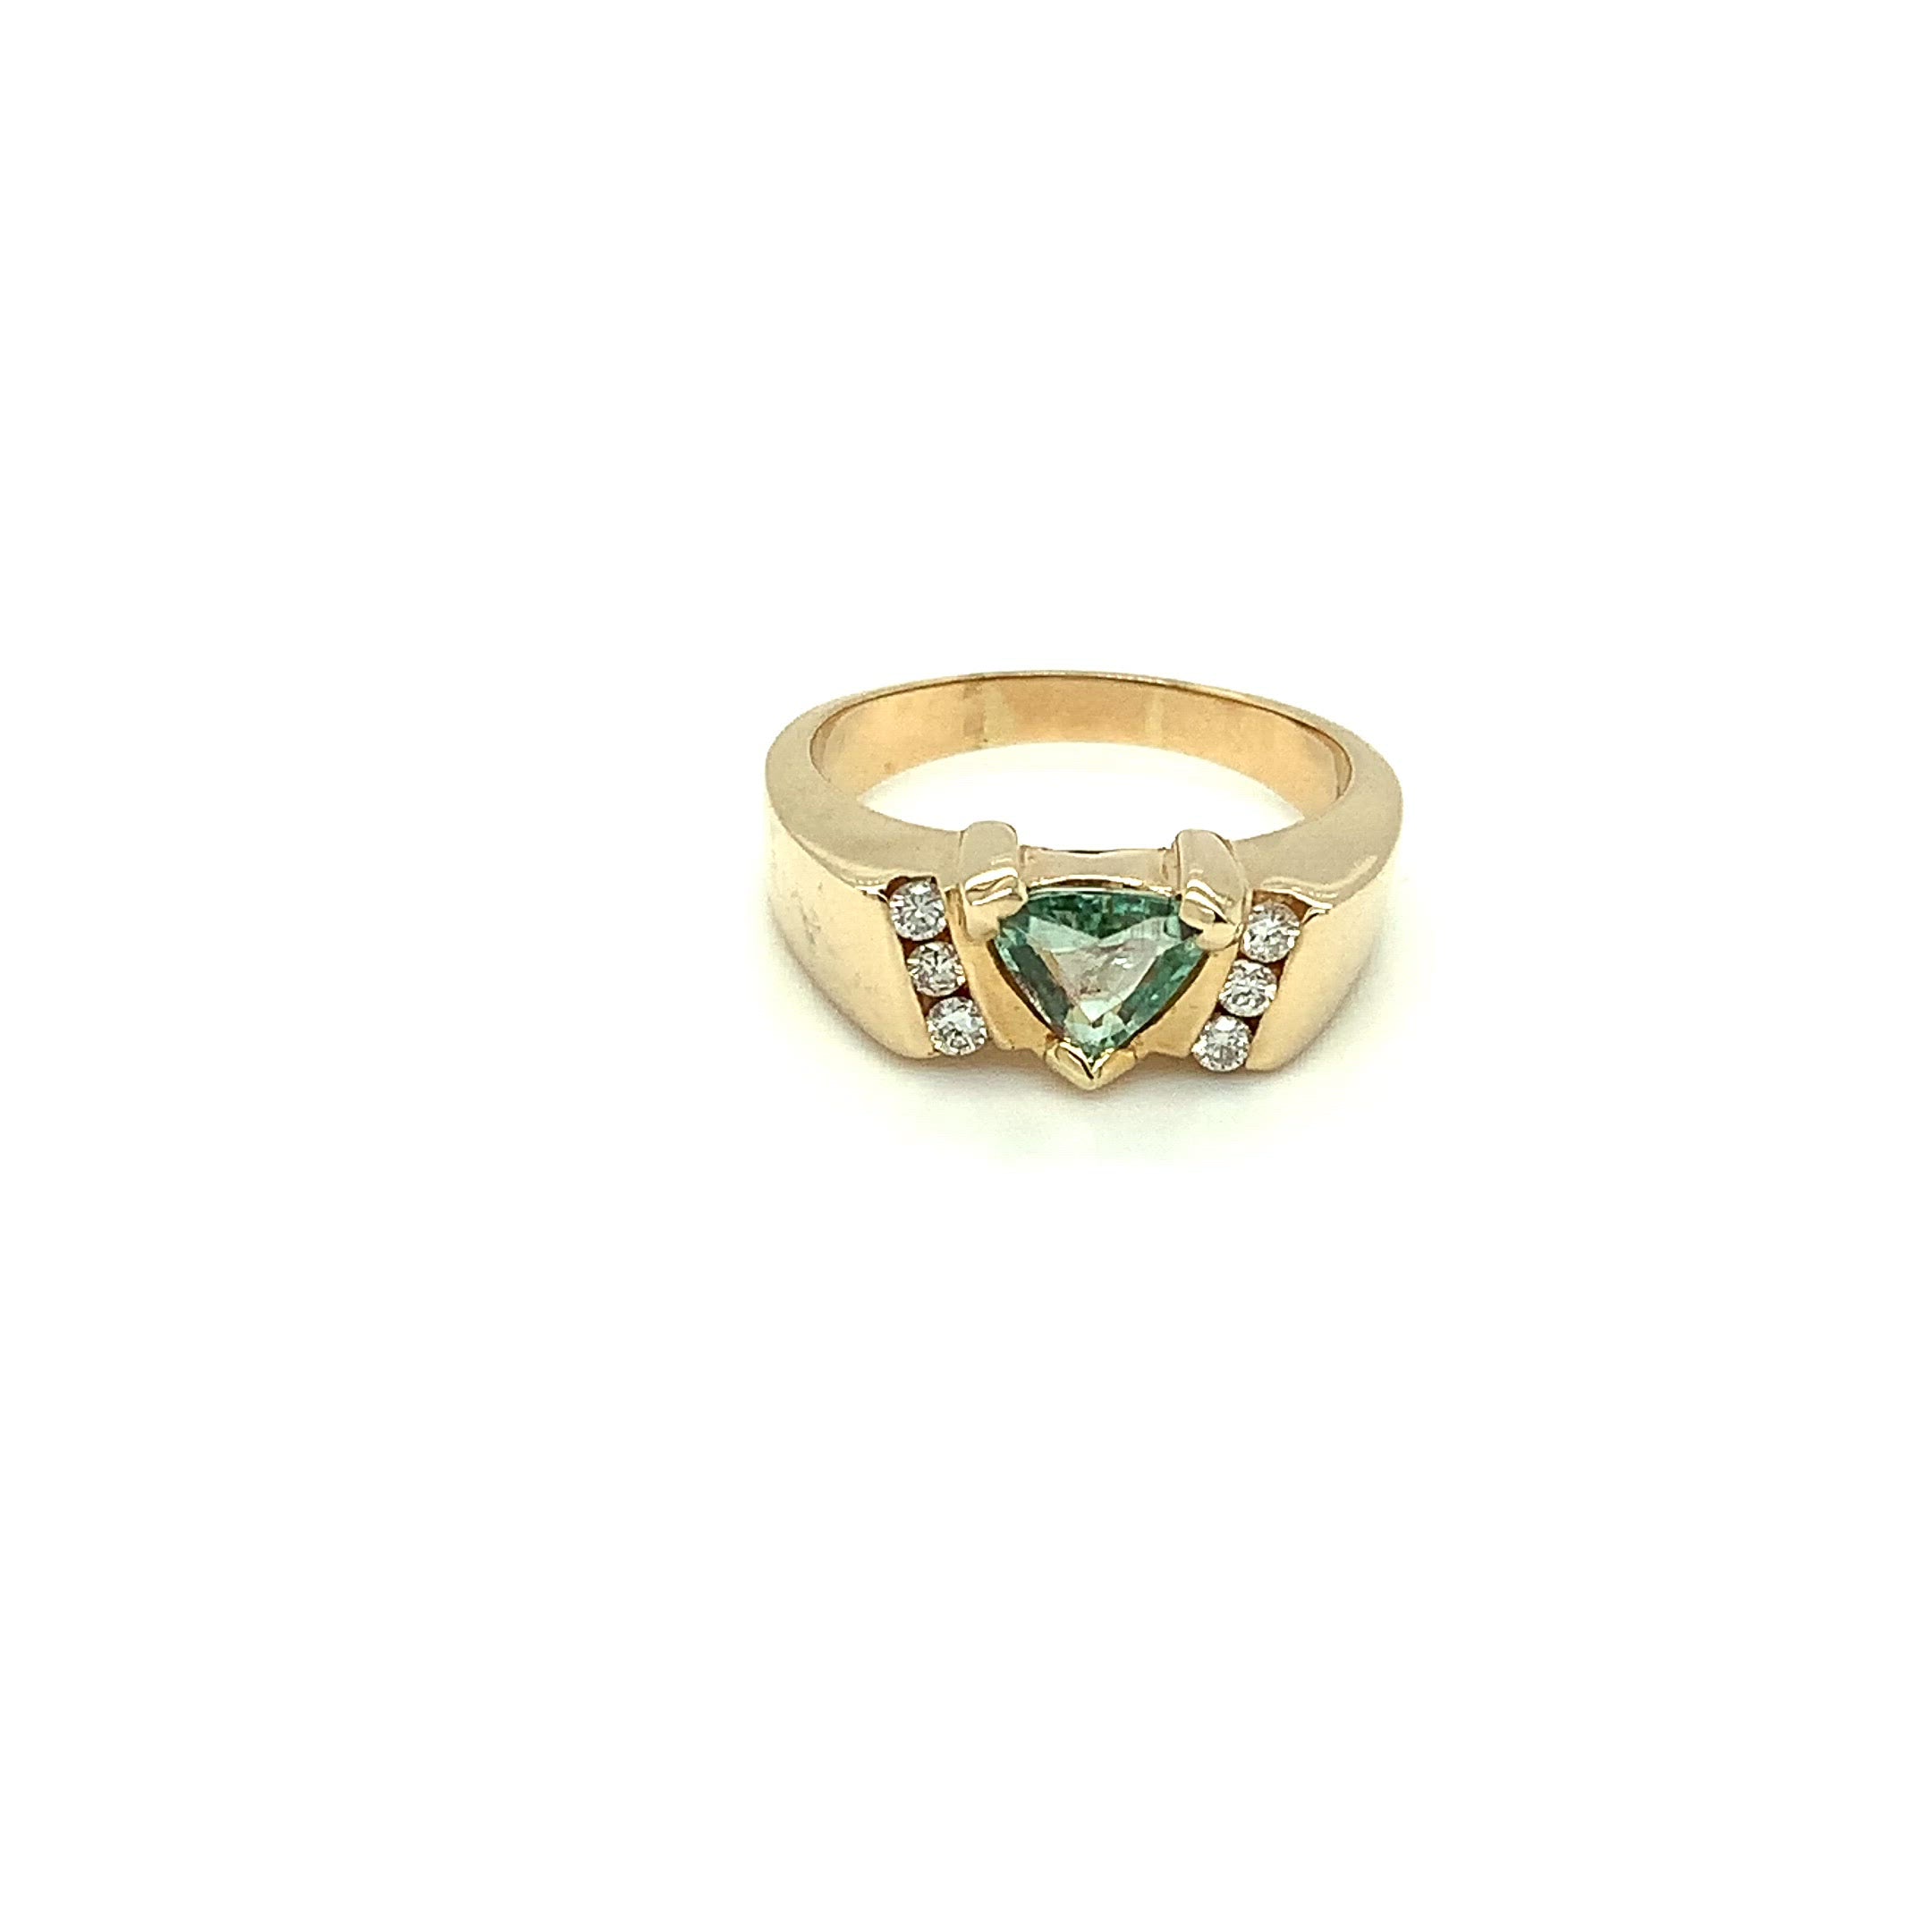 Natural Paraiba Tourmaline & Diamond Ring 14K Solid Gold 1.11tcw Men's Ring Gemstone Ring Statement Ring Birthstone Ring Fine Jewelry